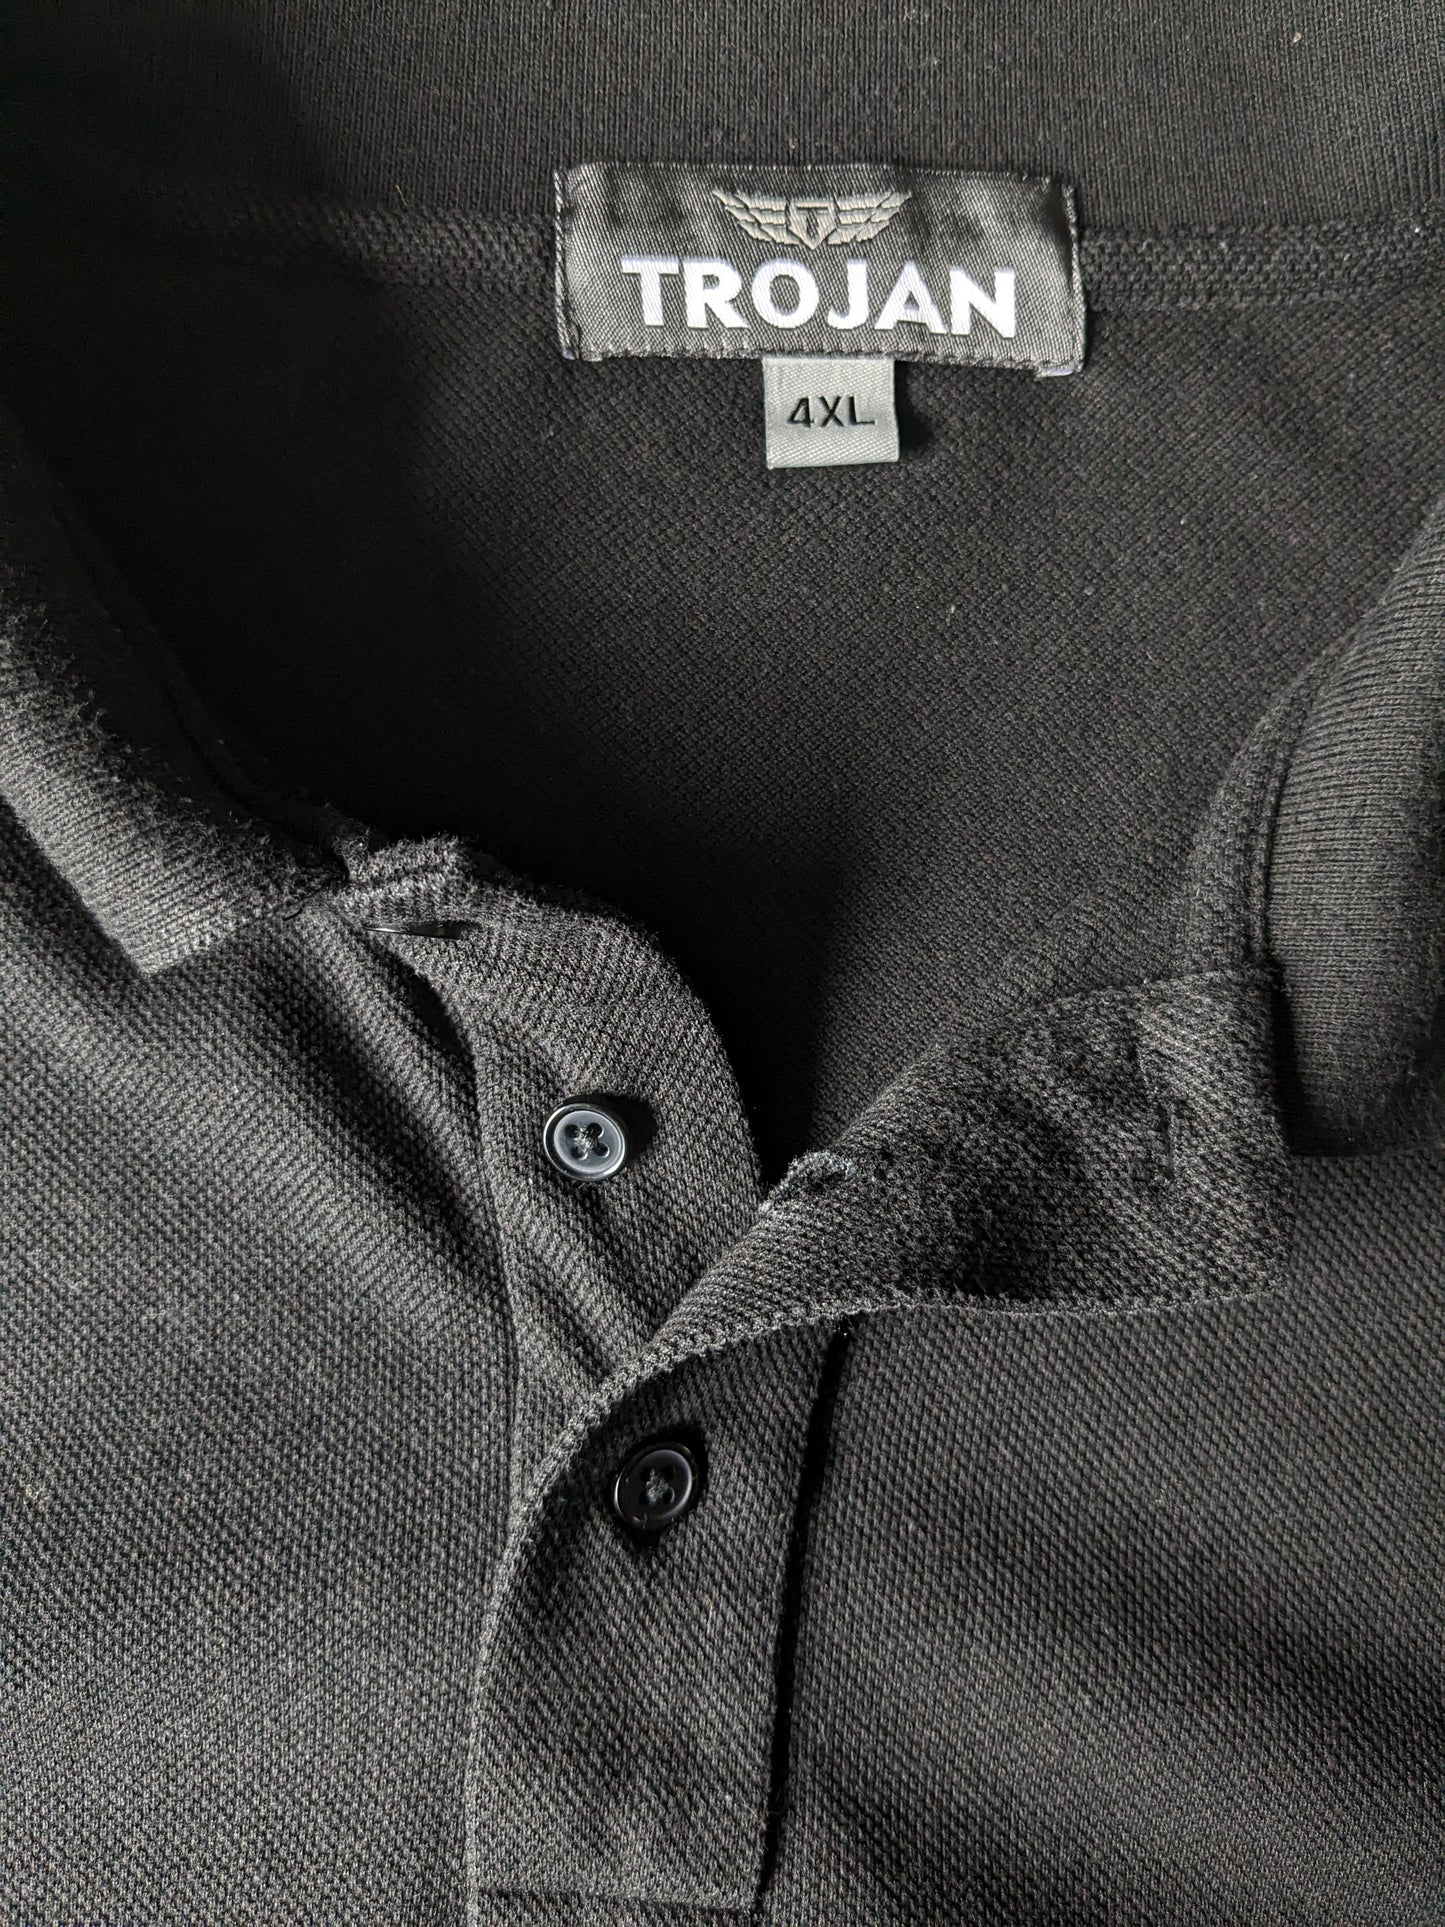 Trojan Polo. Black colored. Size 4XL / XXXXL.